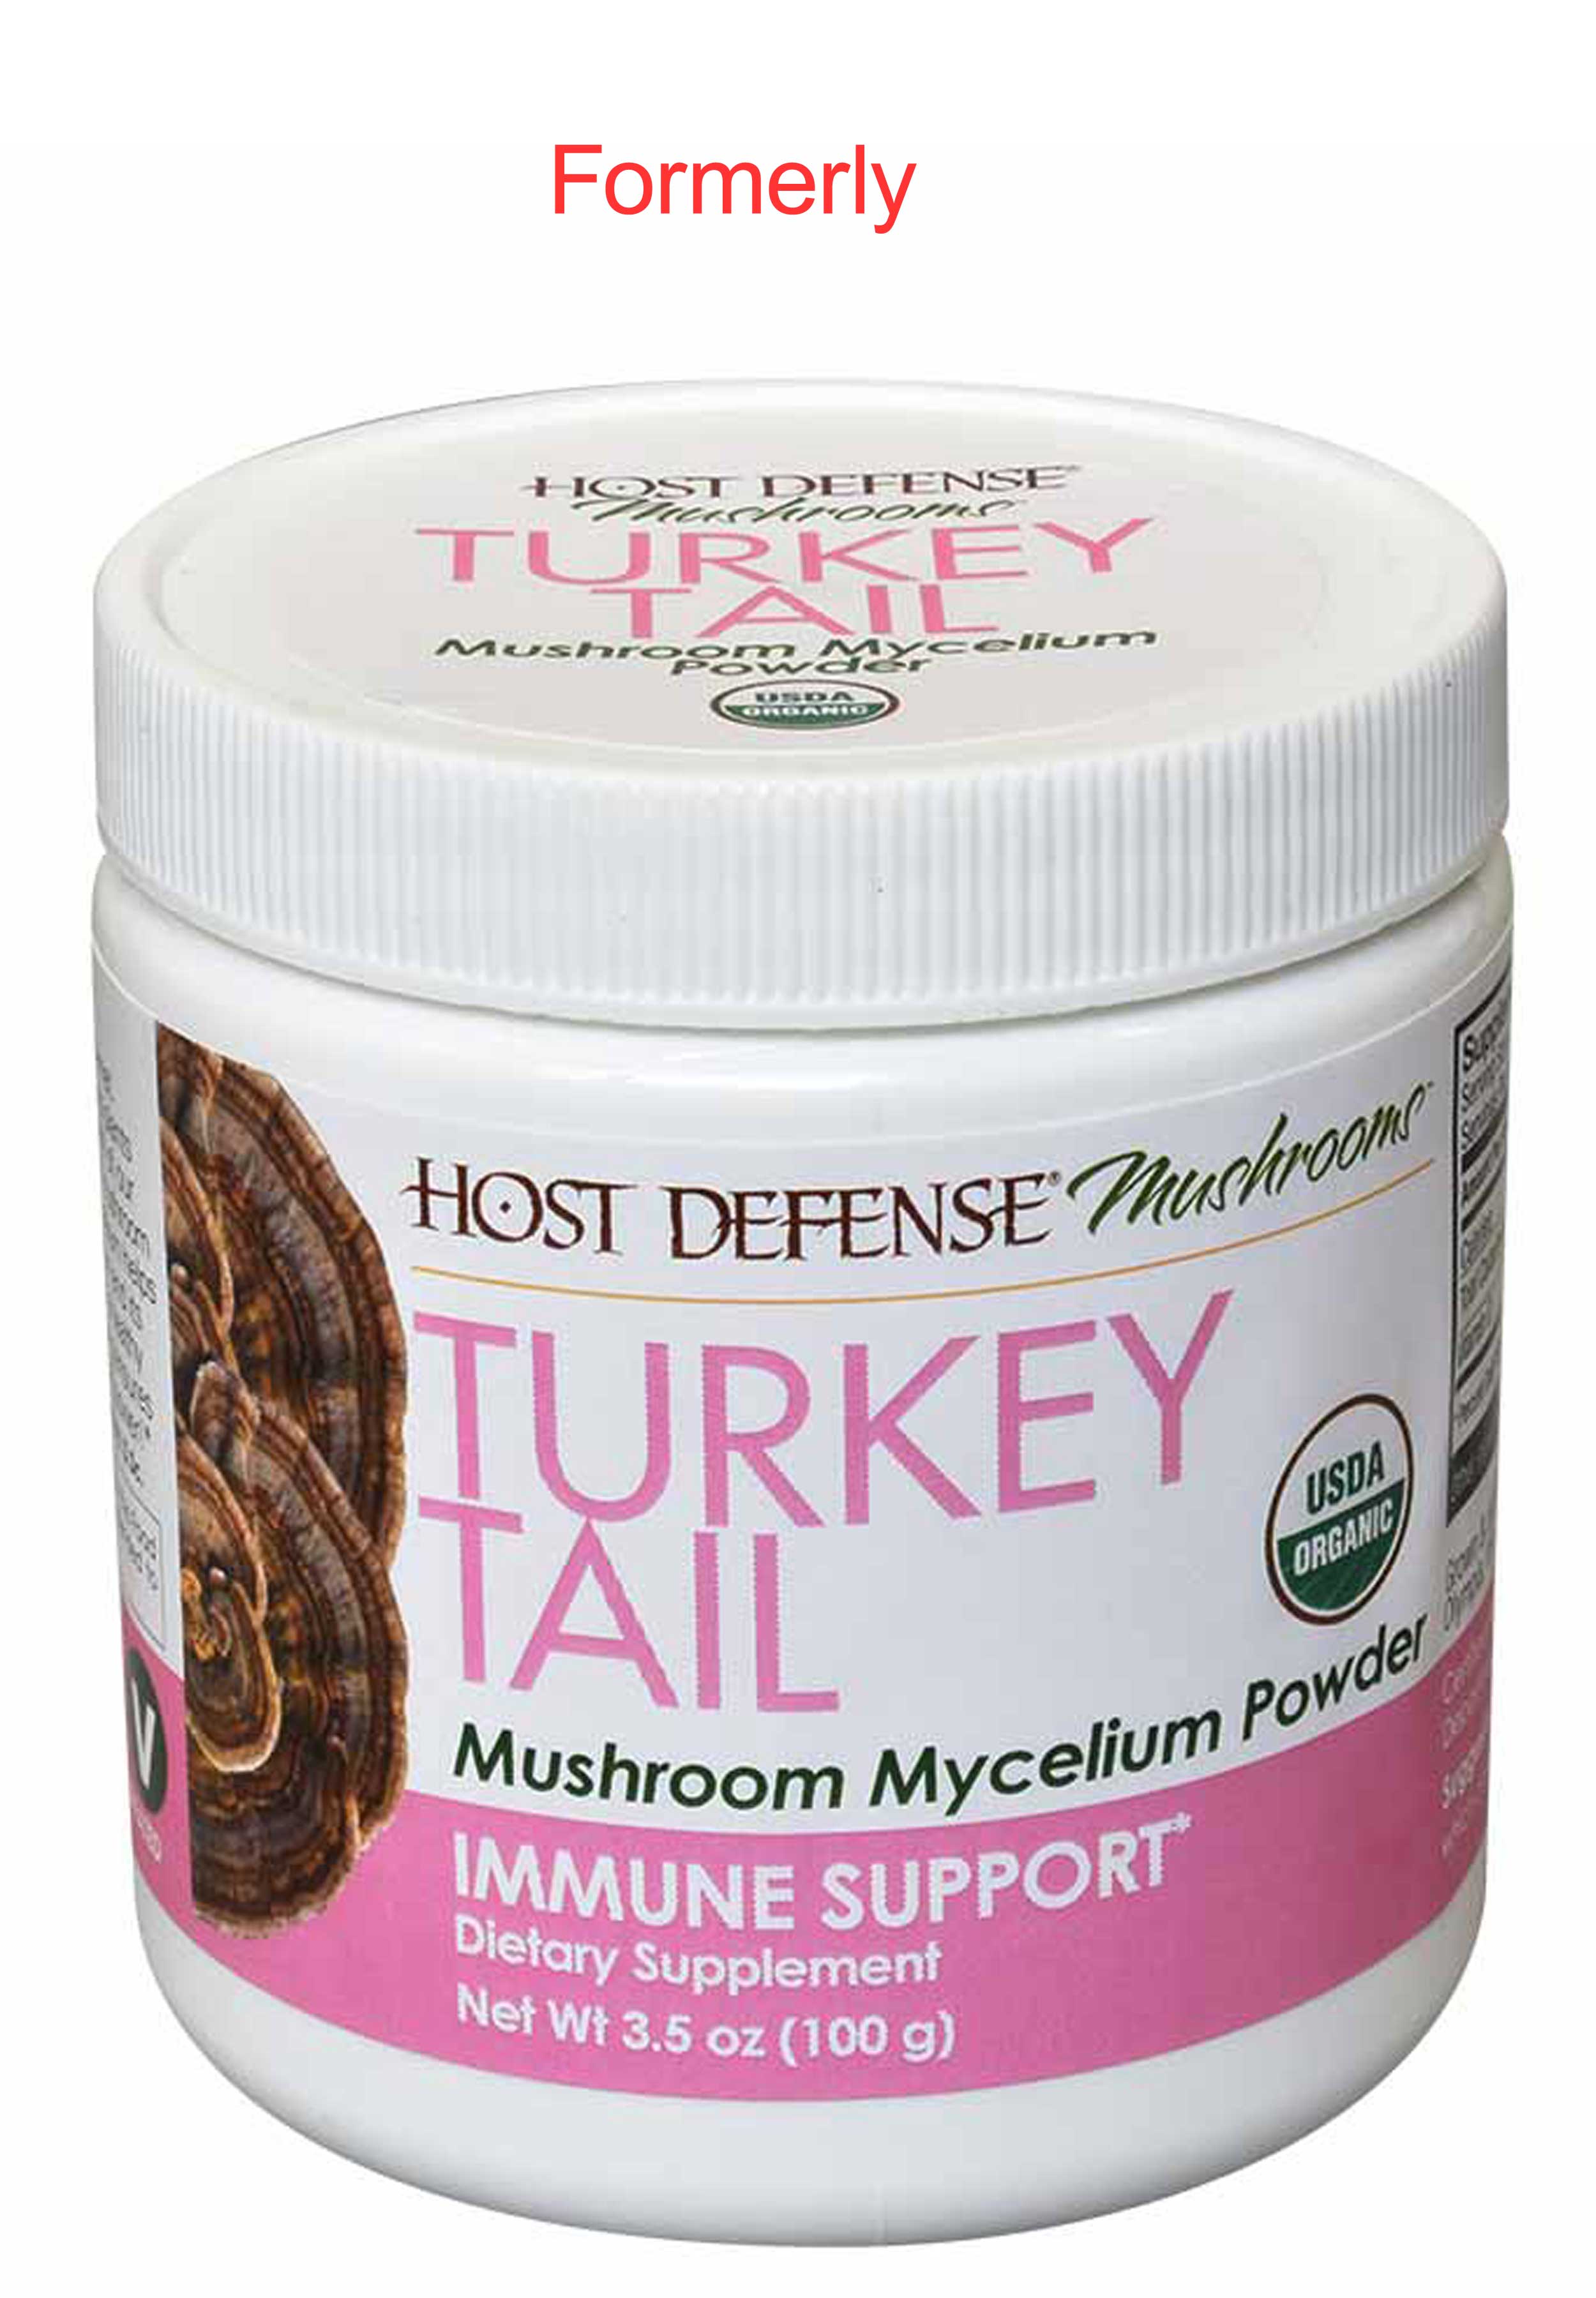 Host Defense Turkey Tail Mycelium Powder Formerly